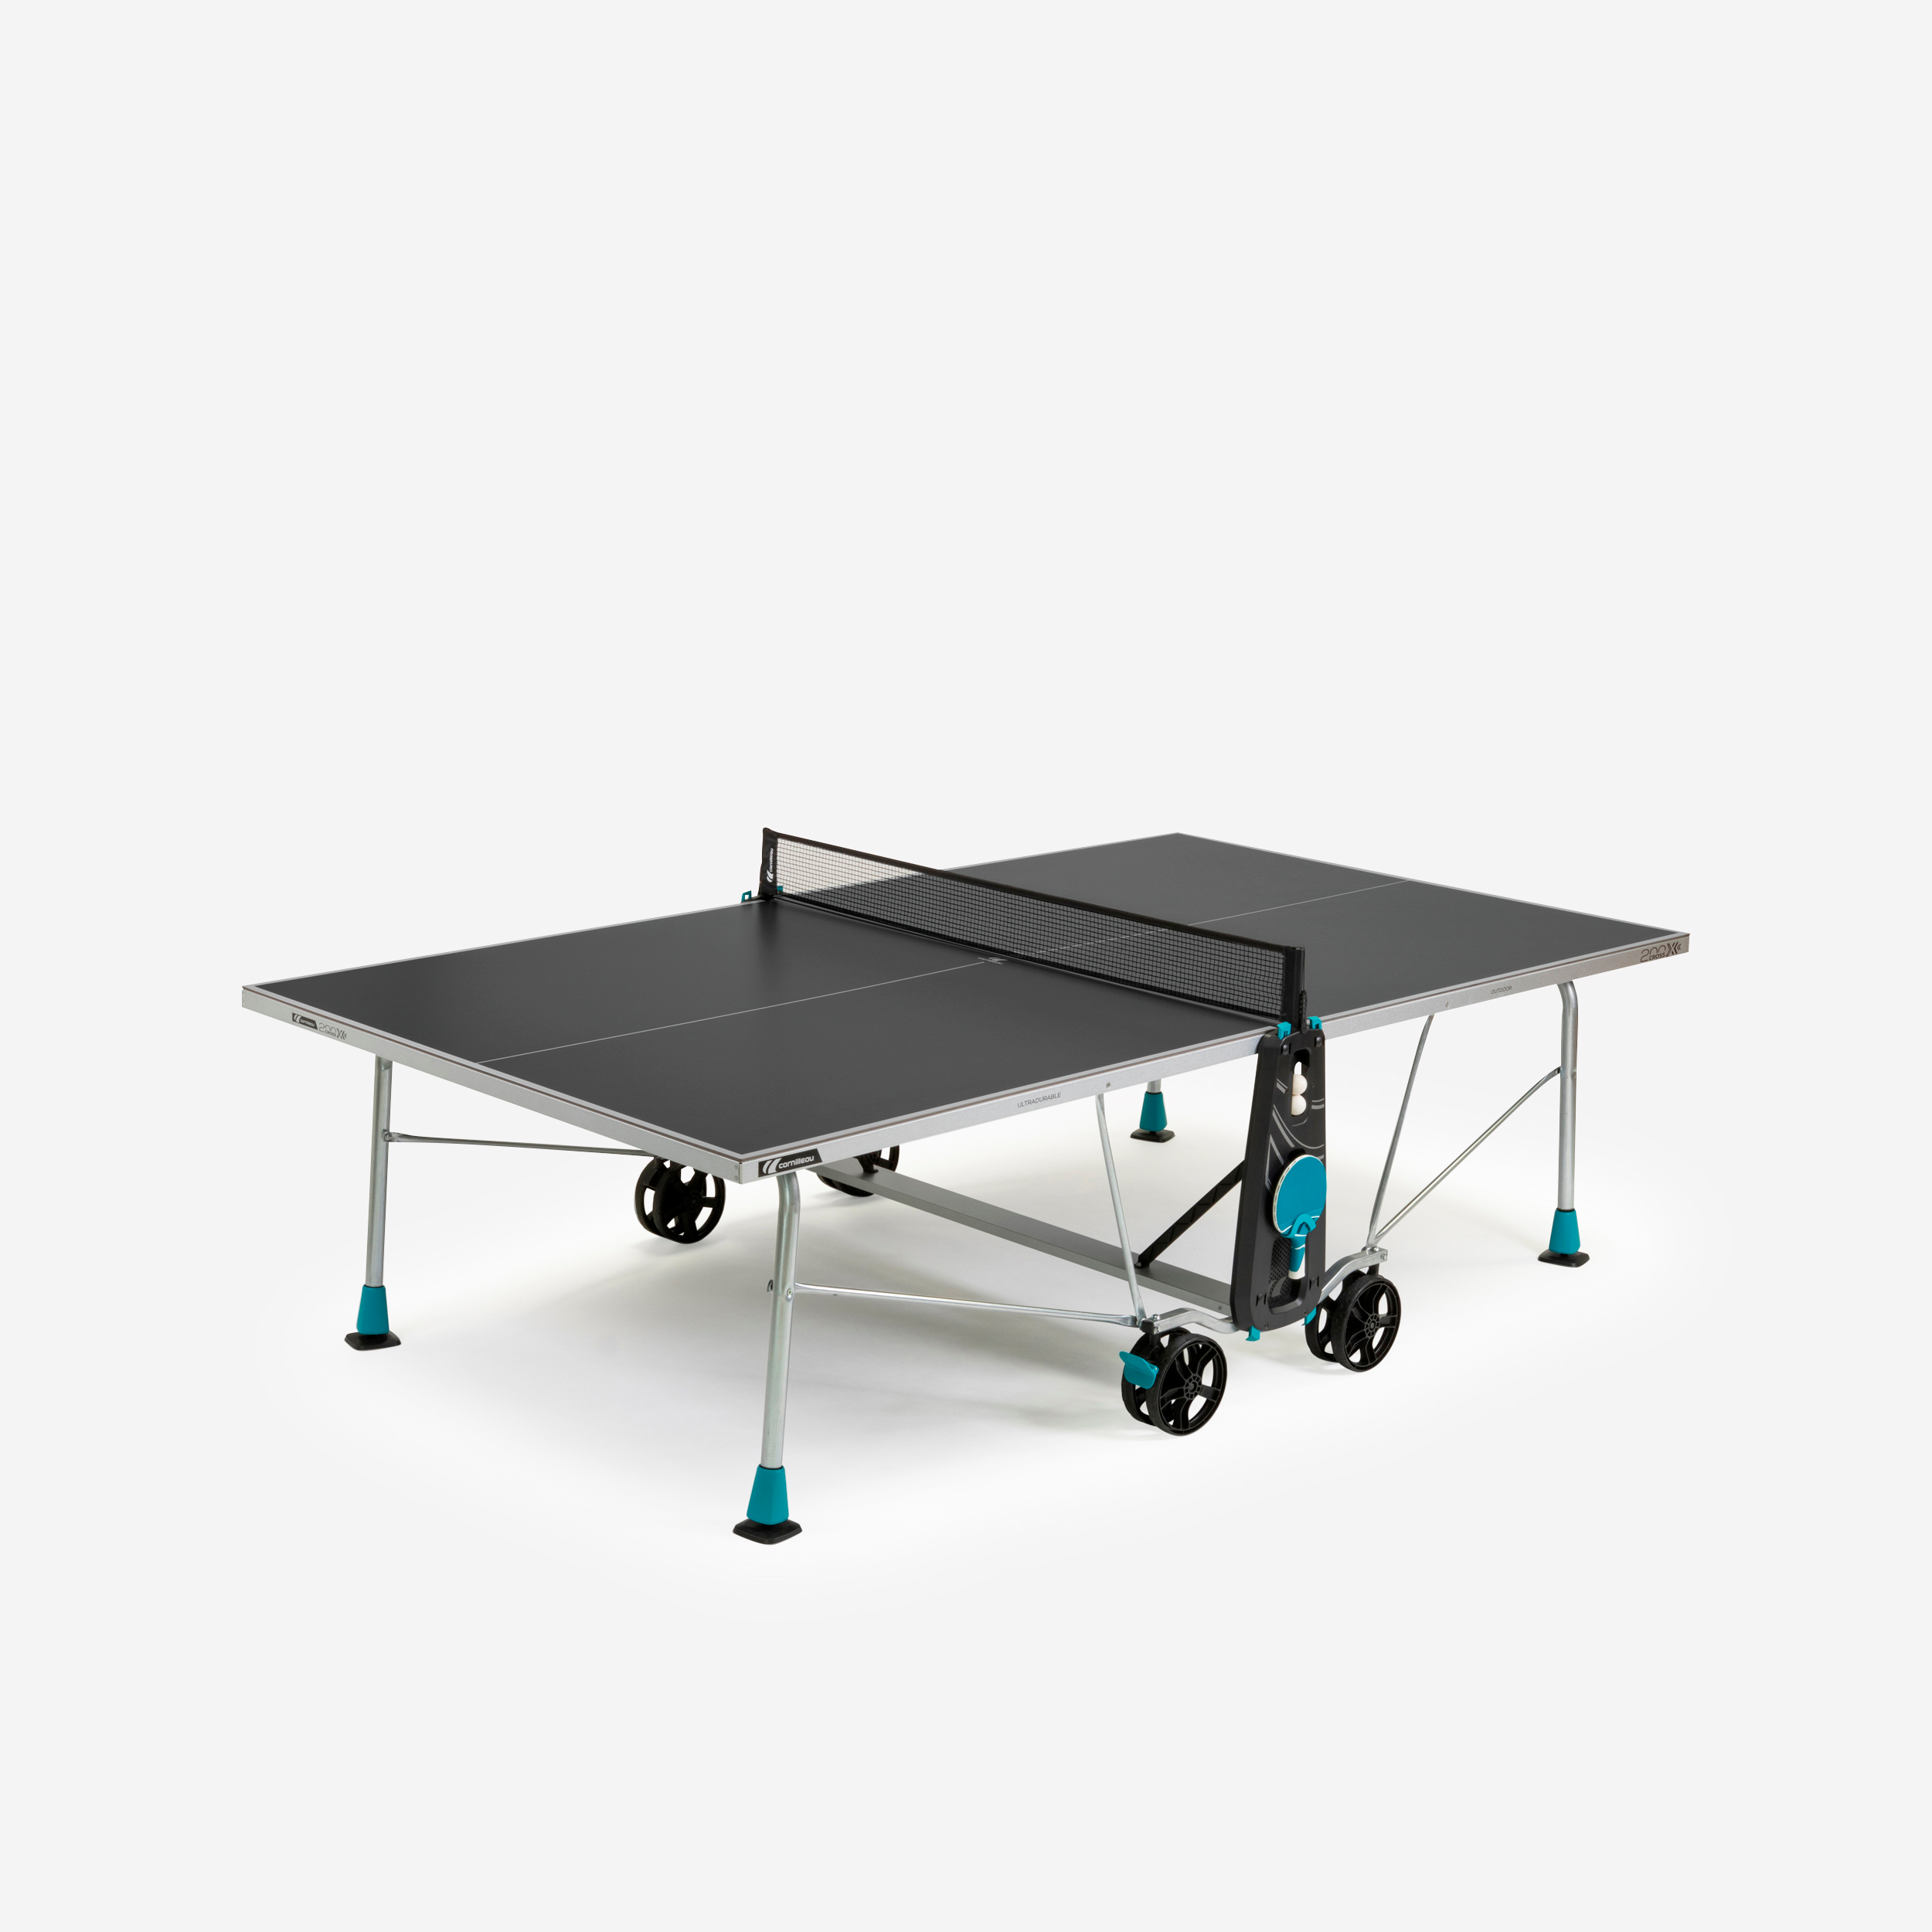 Raquette de Ping Pong - Tennis de table loisir